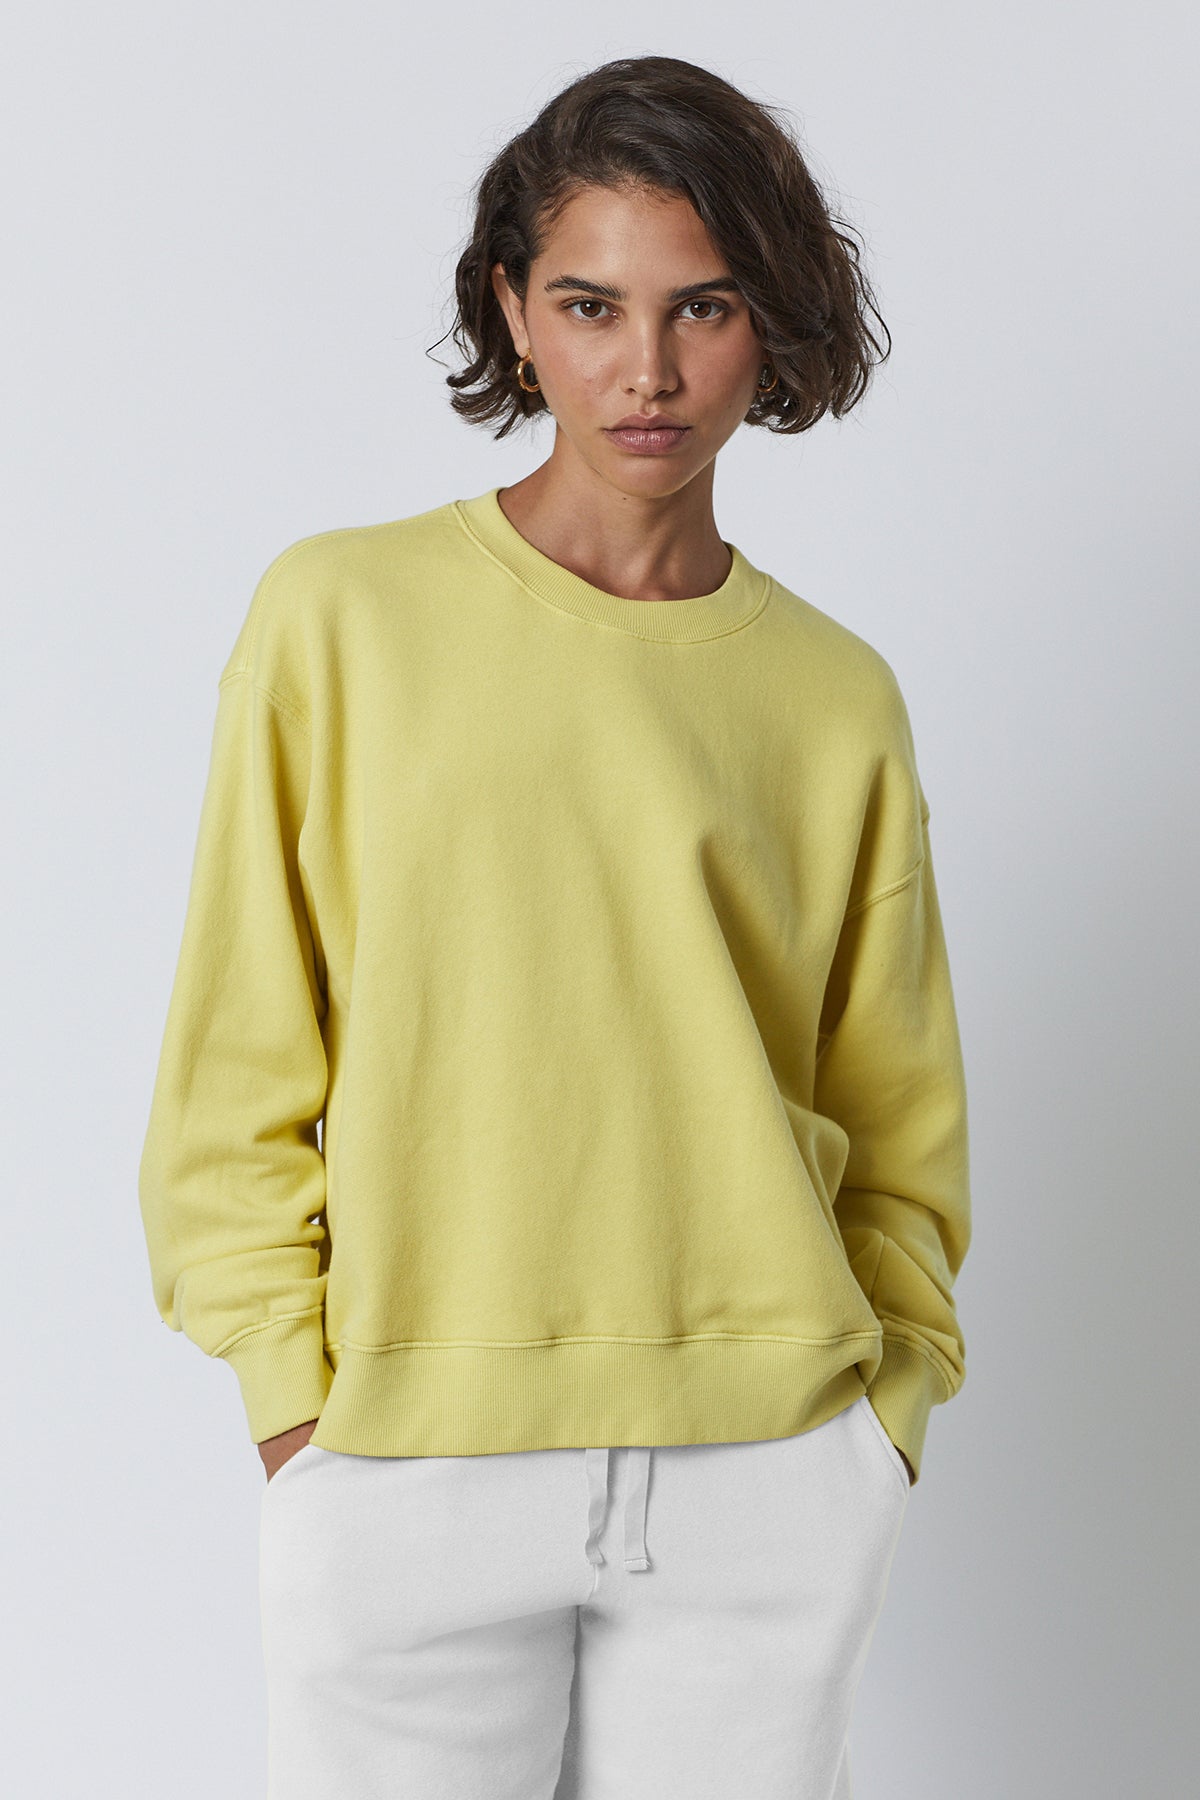 Ynez Sweatshirt in lemon yellow front-26007095640257